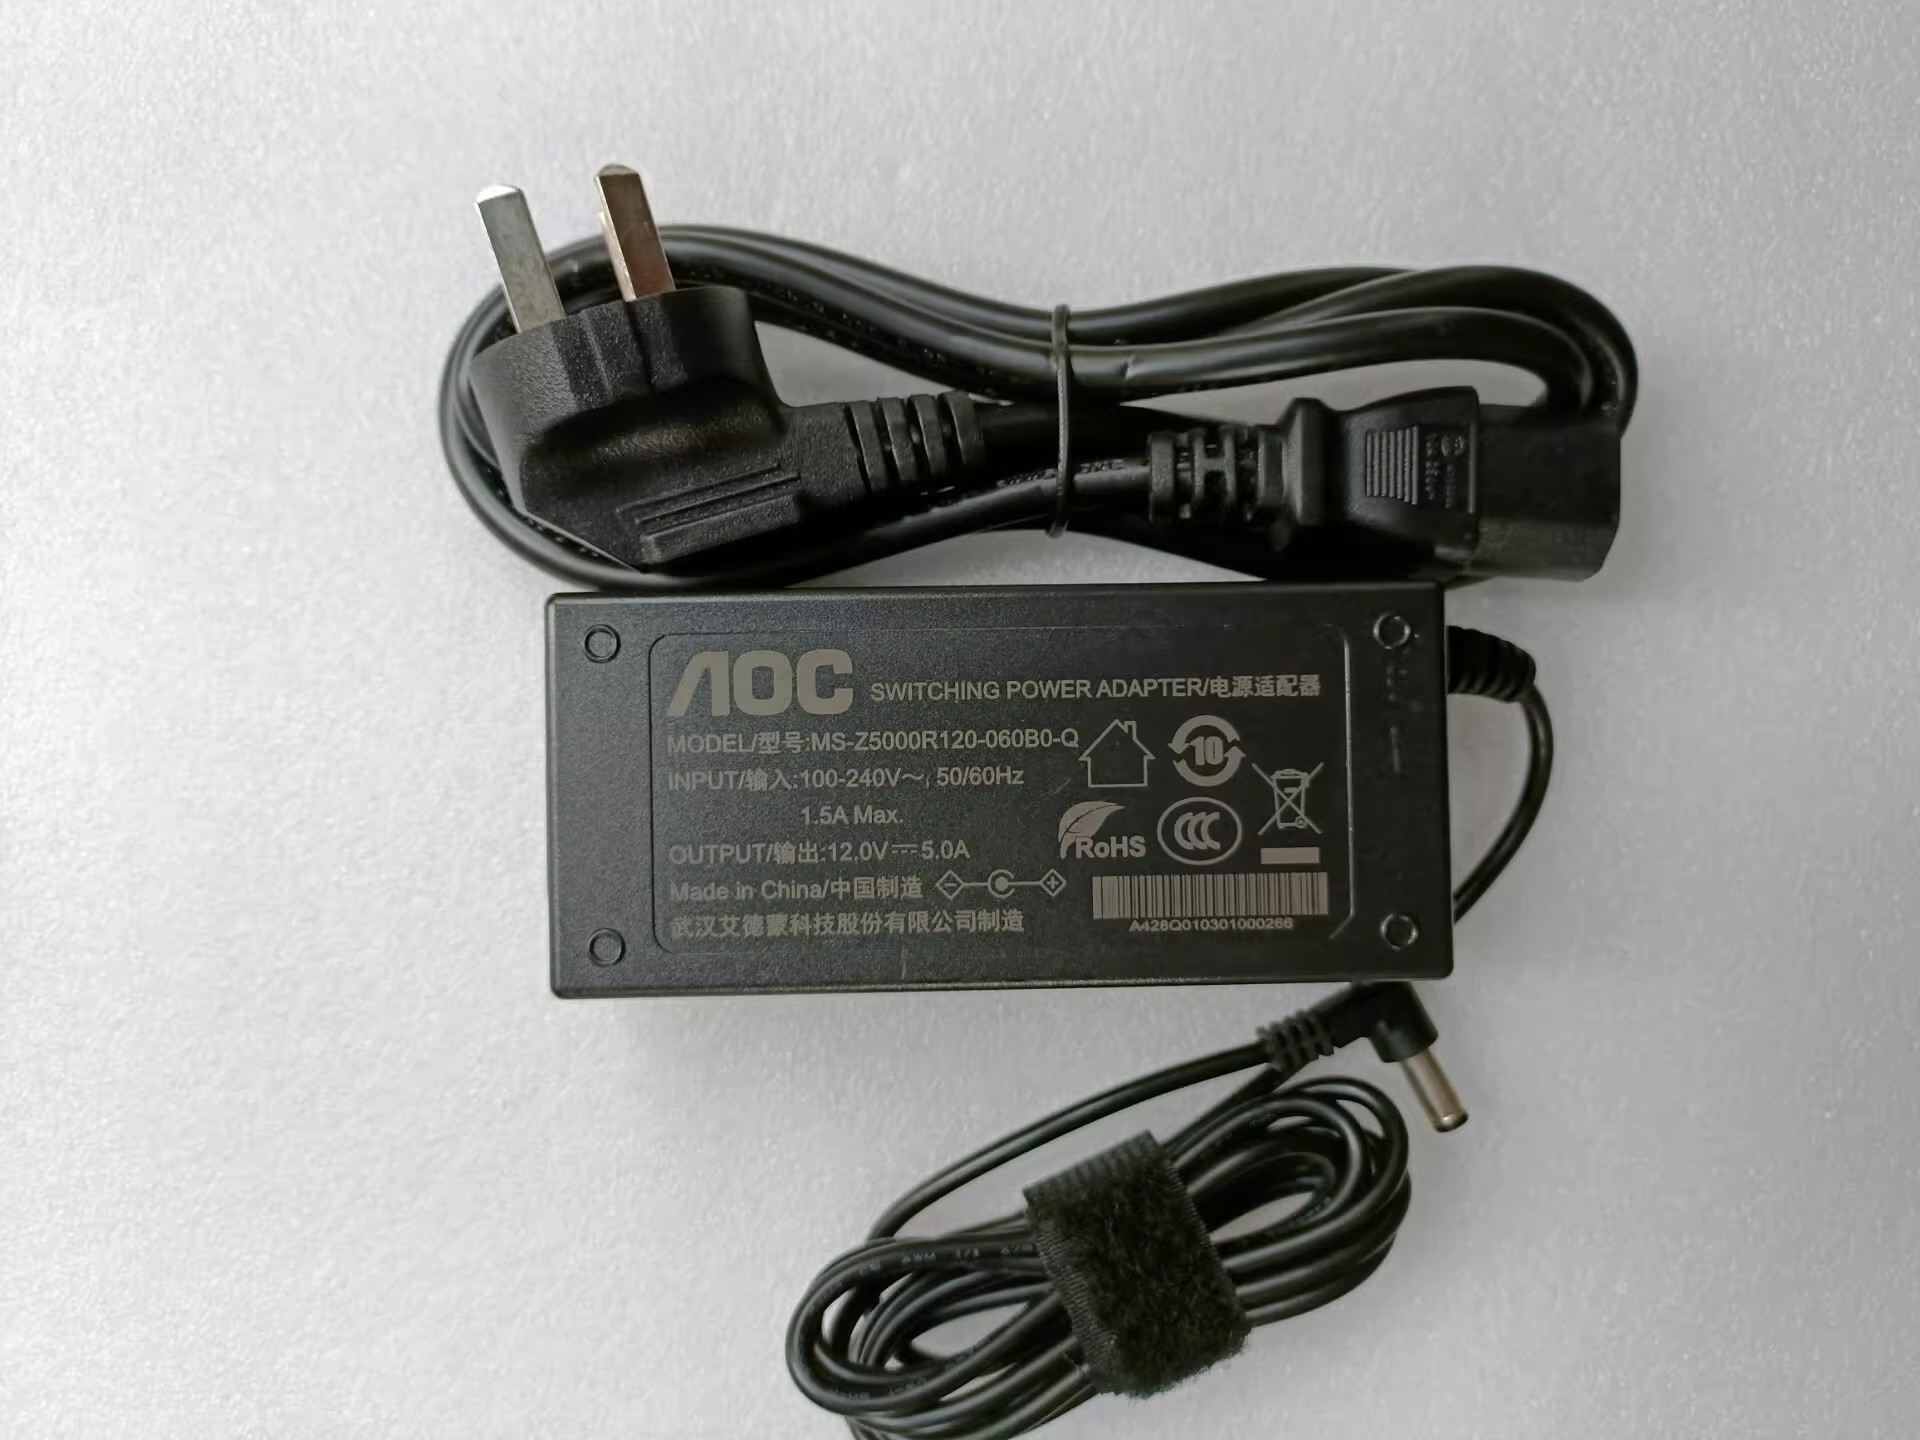 *Brand NEW*AOC MS-Z5000R120-060BO-Q 12V 5A AC DC ADAPTHE POWER Supply